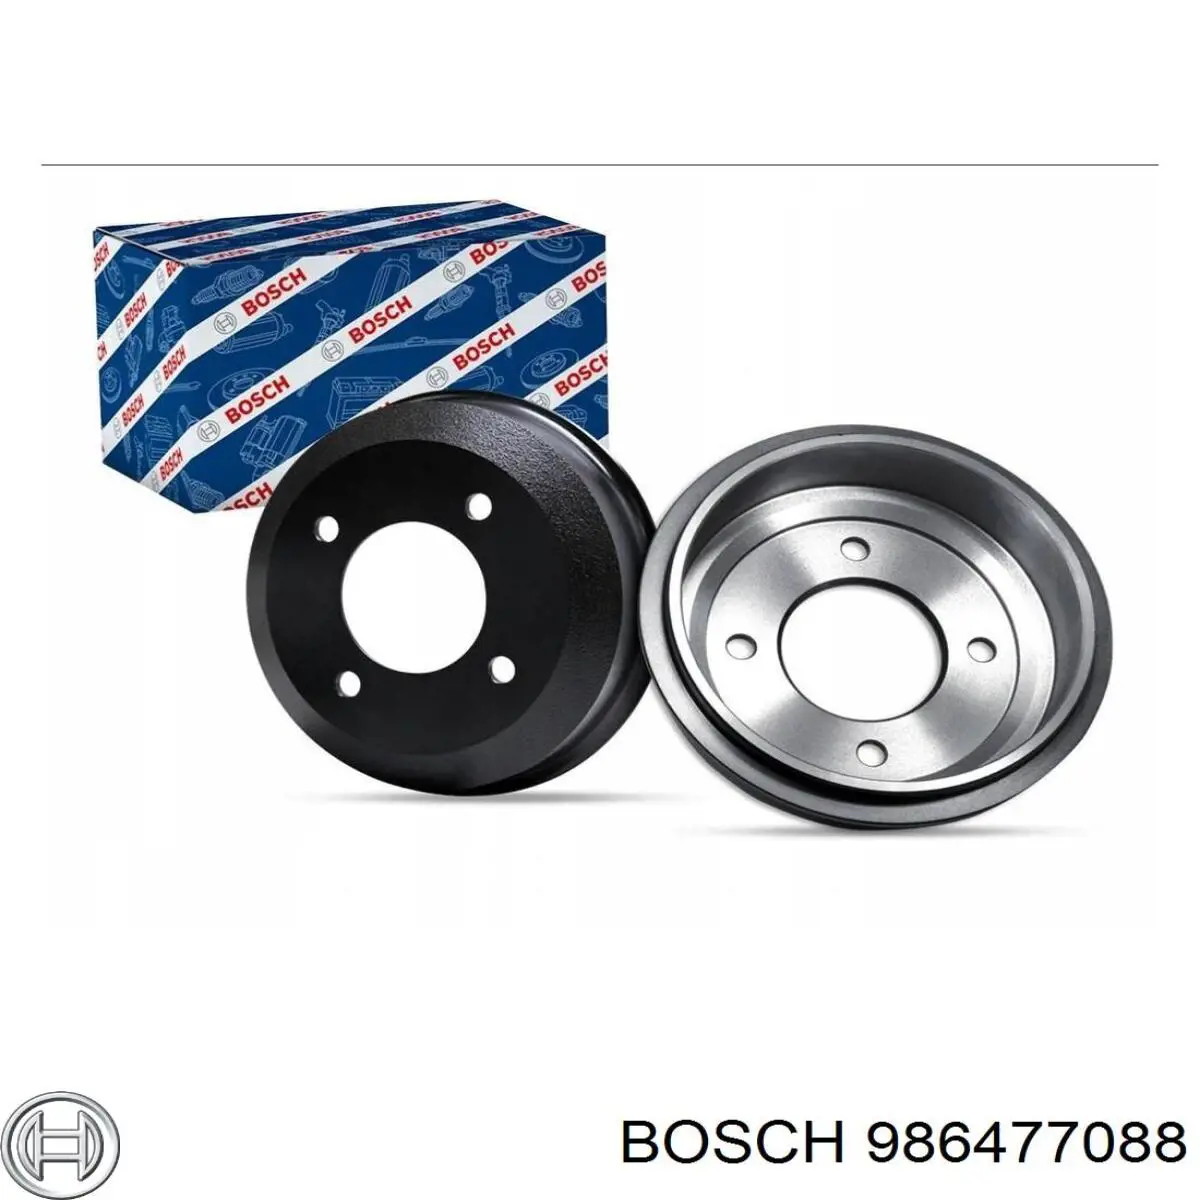 986477088 Bosch барабан тормозной задний